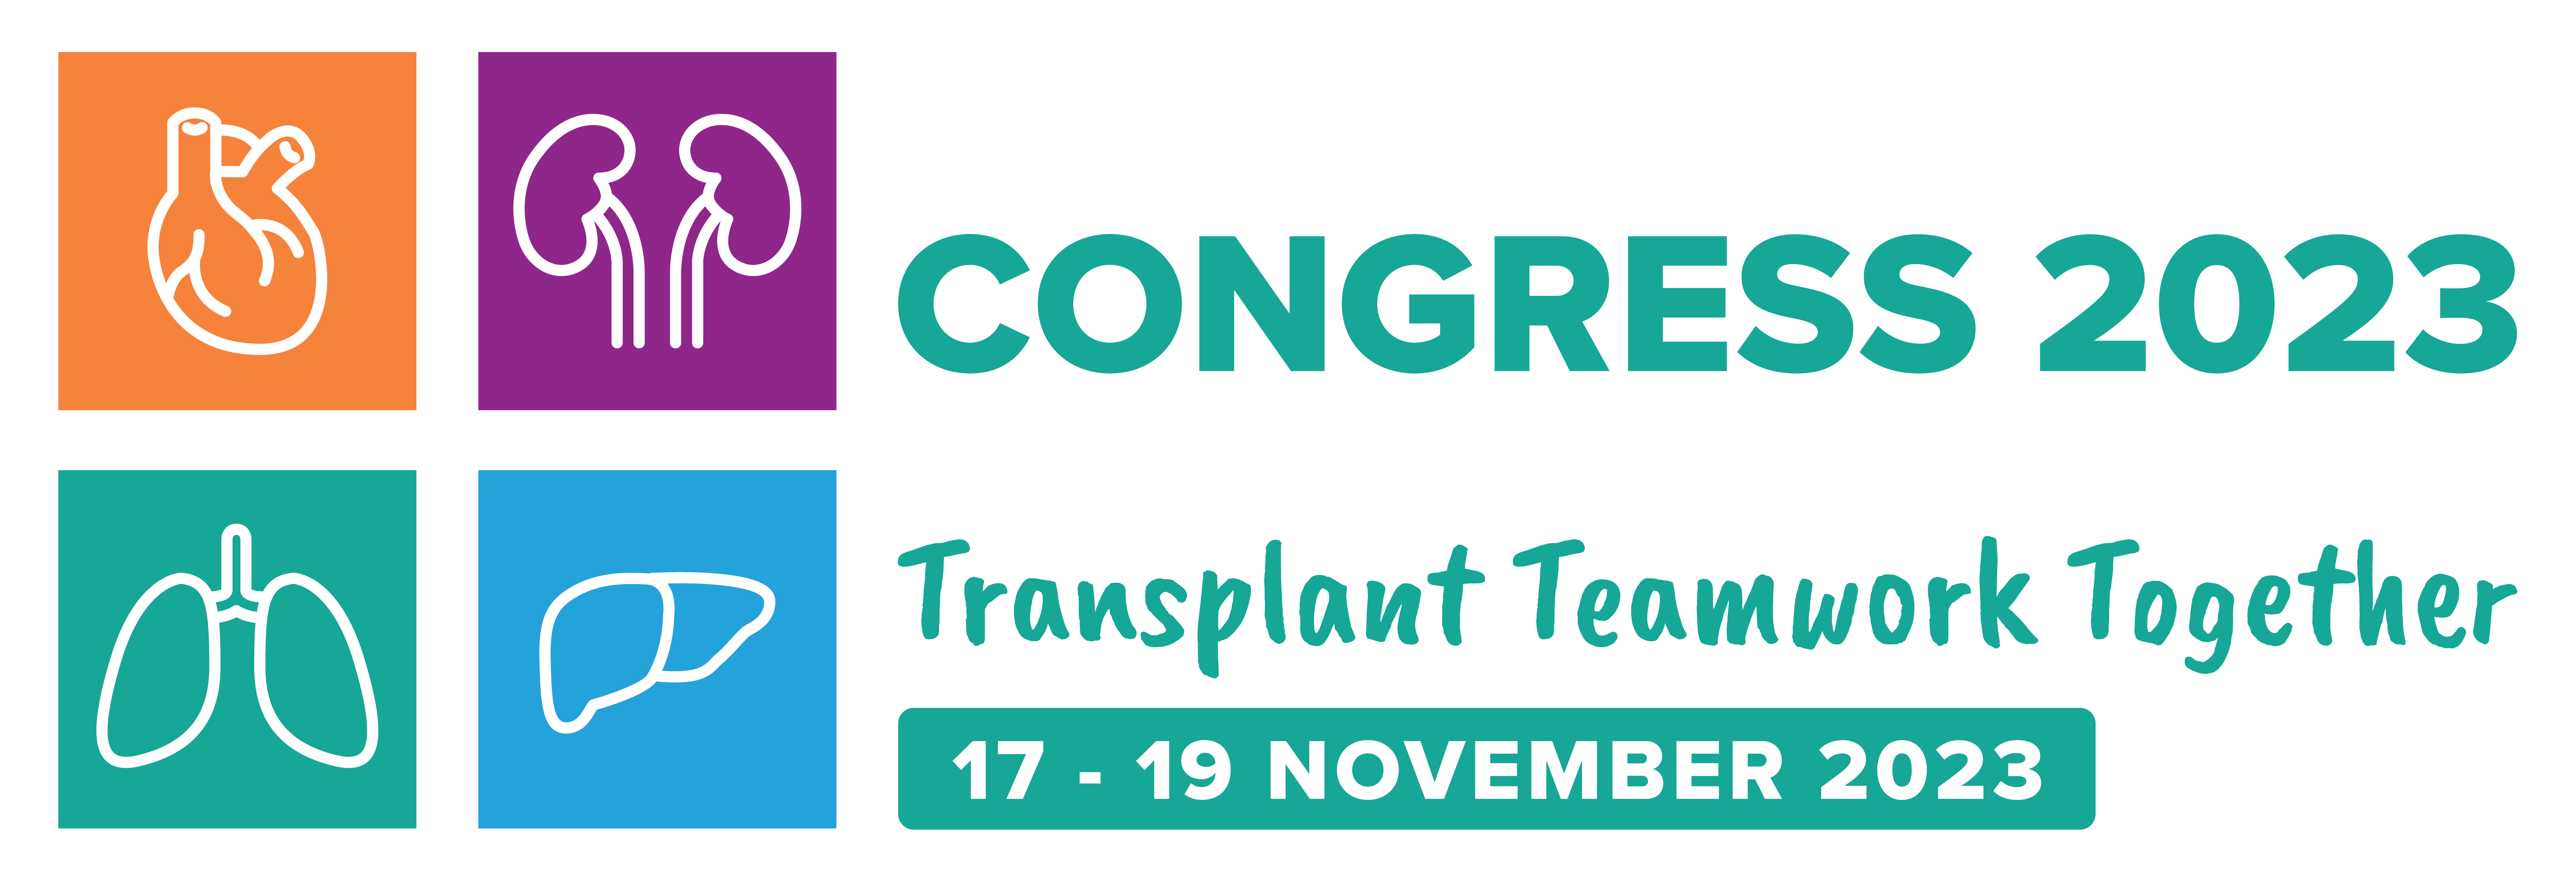 SA Transplant Congress 2023